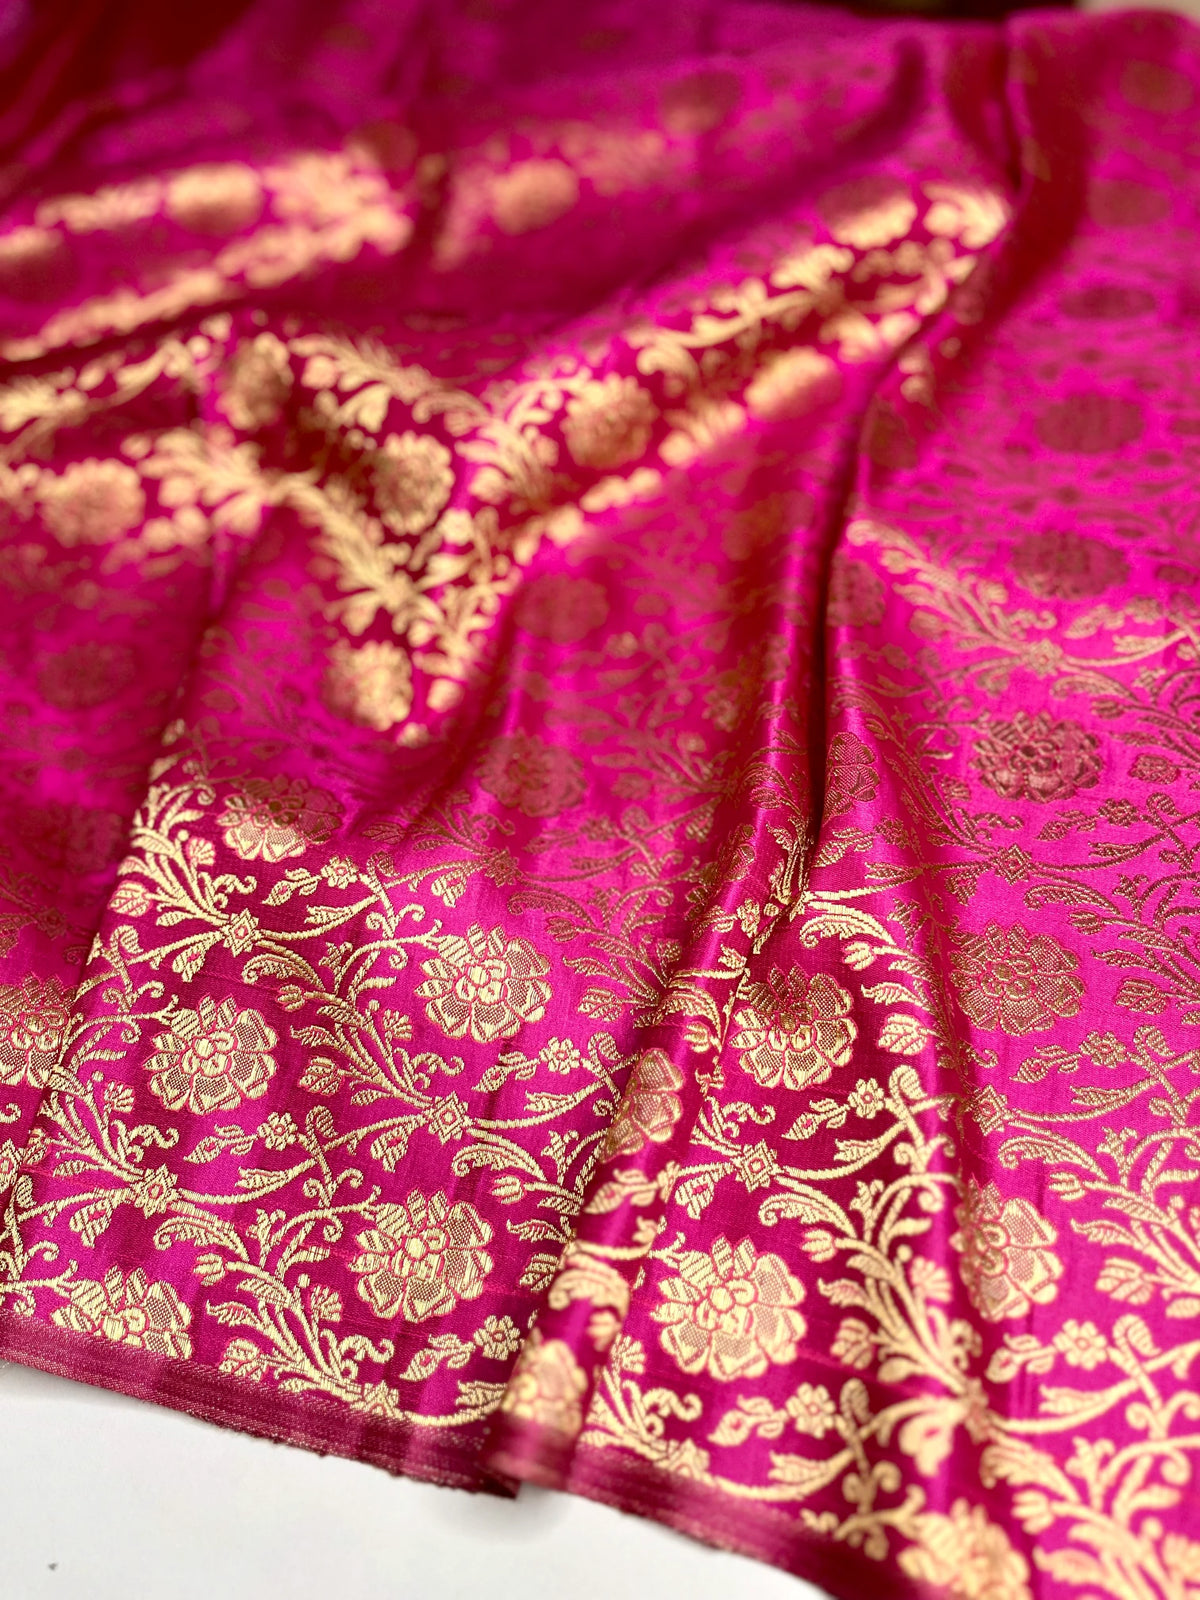 Varni Handwoven Tissue Saree - Apricot Blush + Cerise Pink